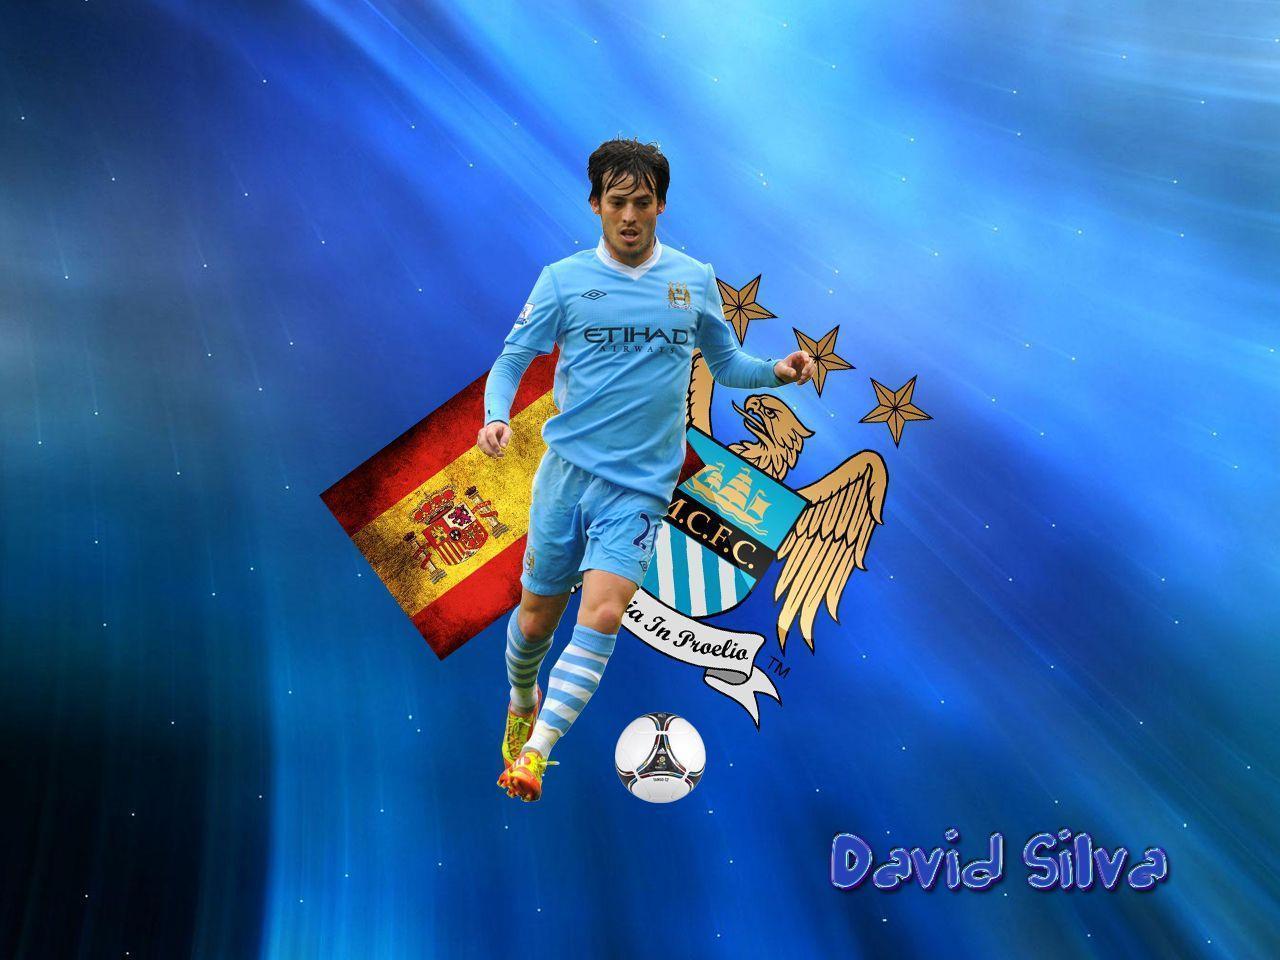 david silva man city wallpaper, Football Picture and Photo